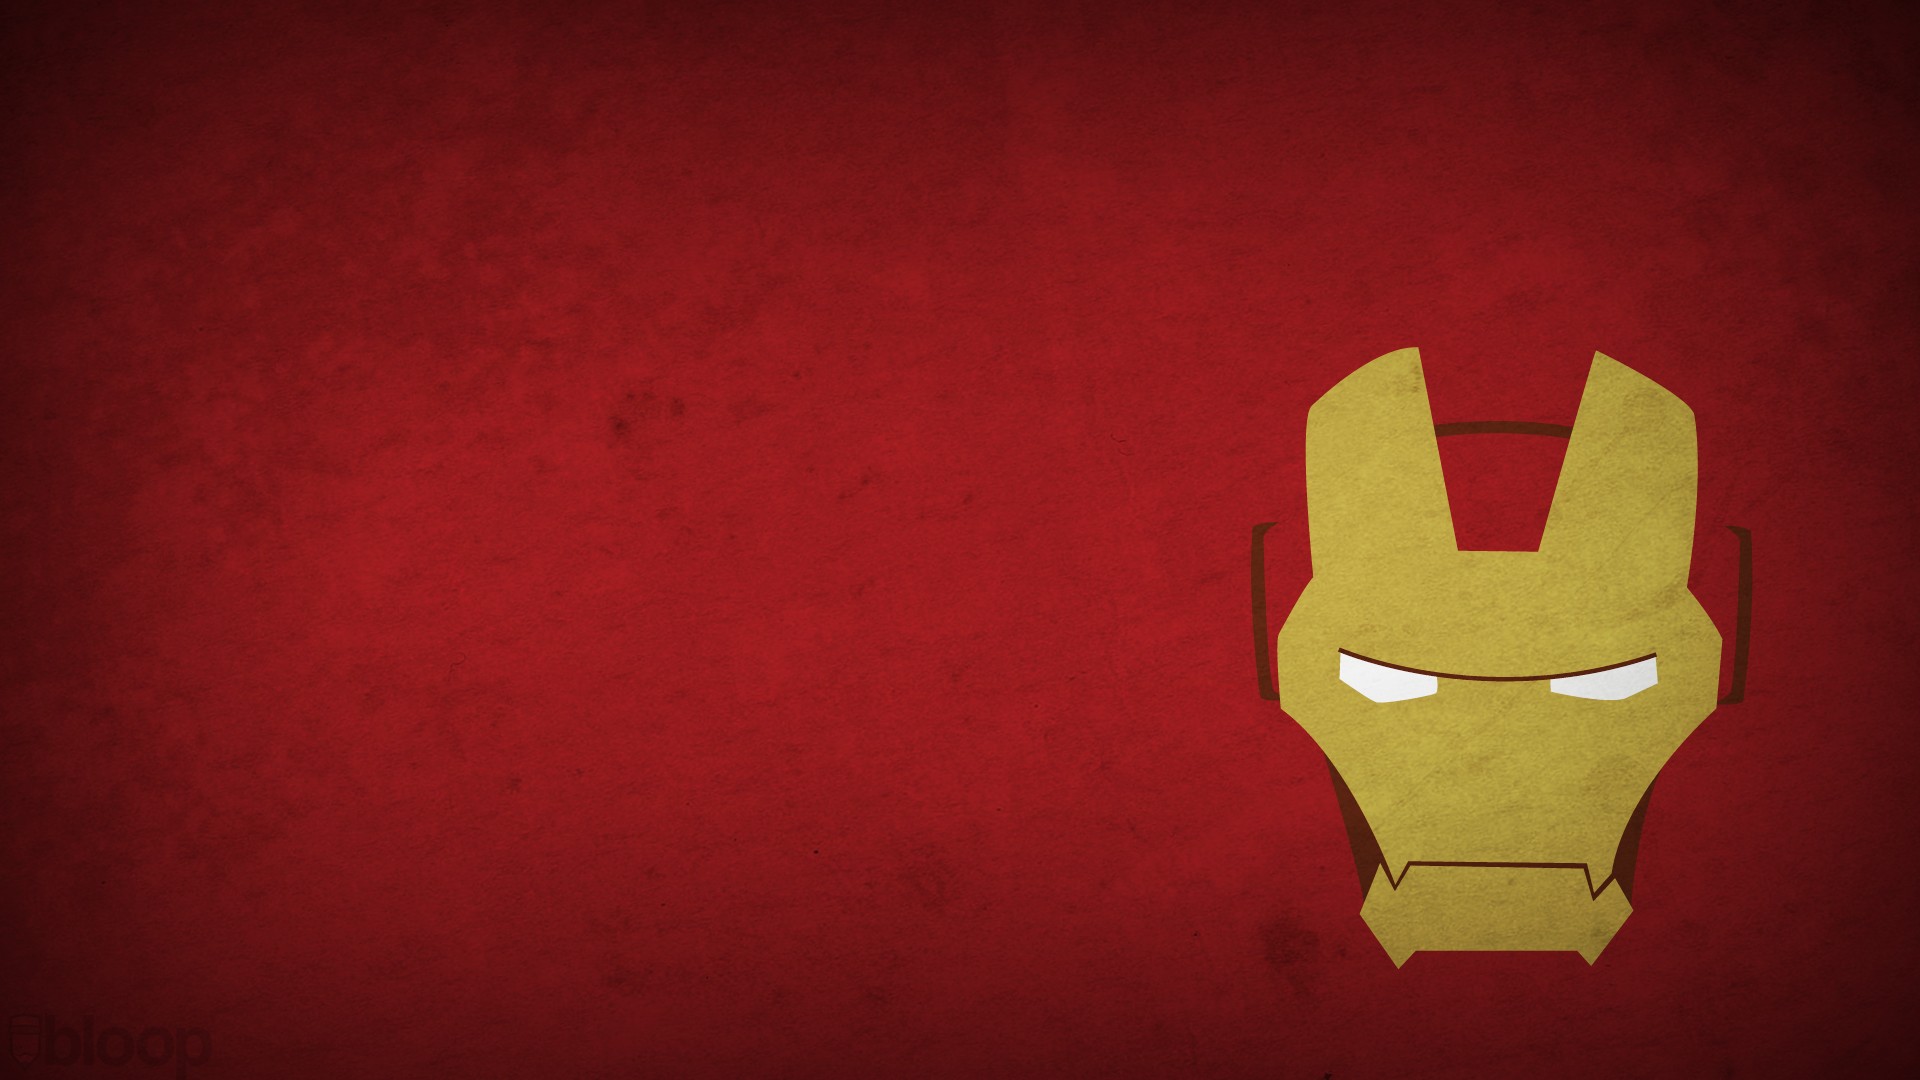 General 1920x1080 Iron Man minimalism Blo0p red background cartoon hero armor helmet The Avengers